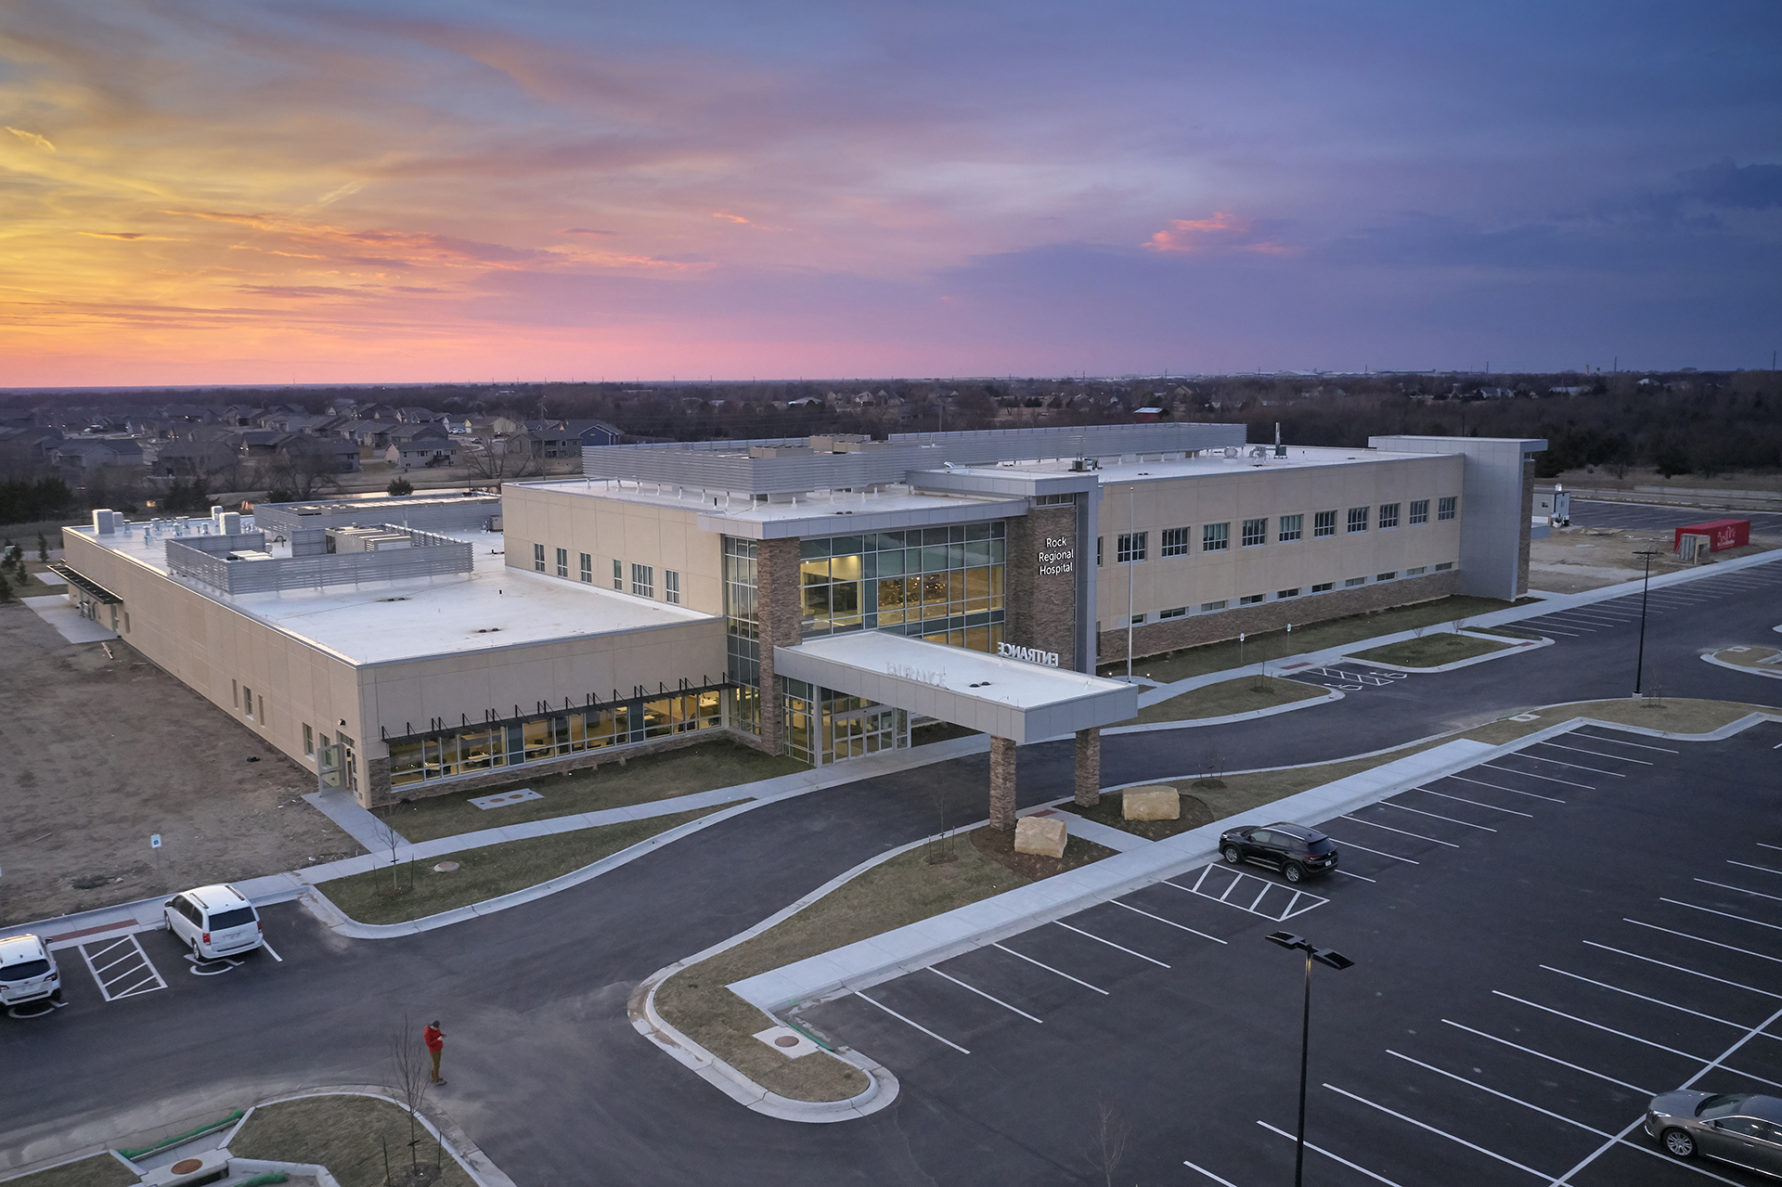 Rock Regional hospital in Kansas built by McCownGordon